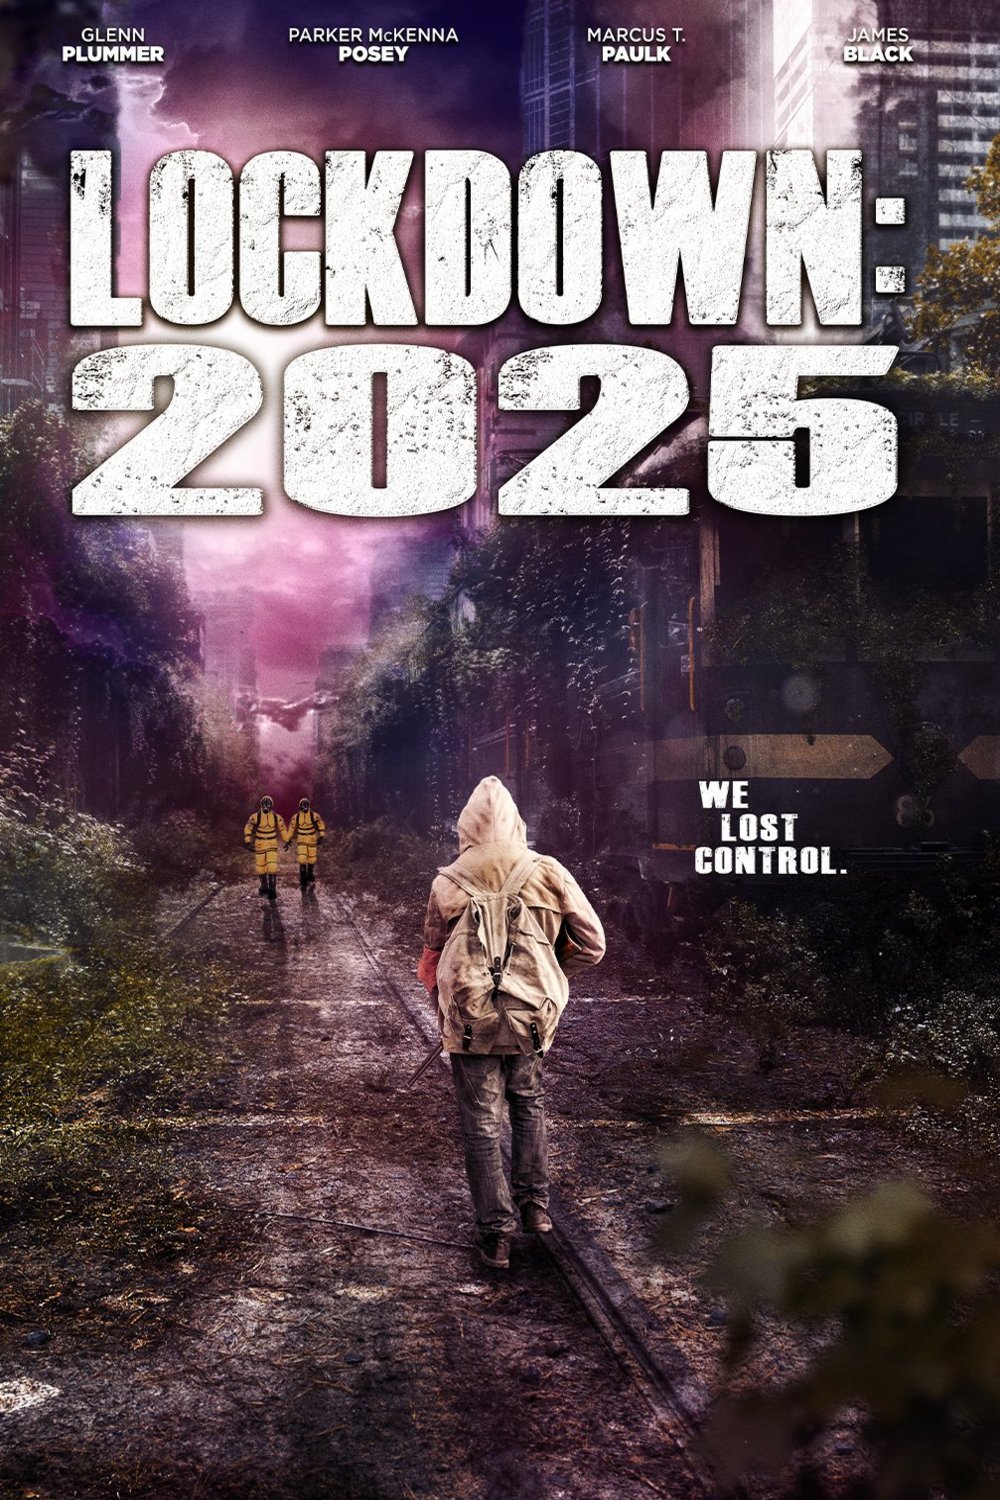 L'affiche du film Lockdown 2025